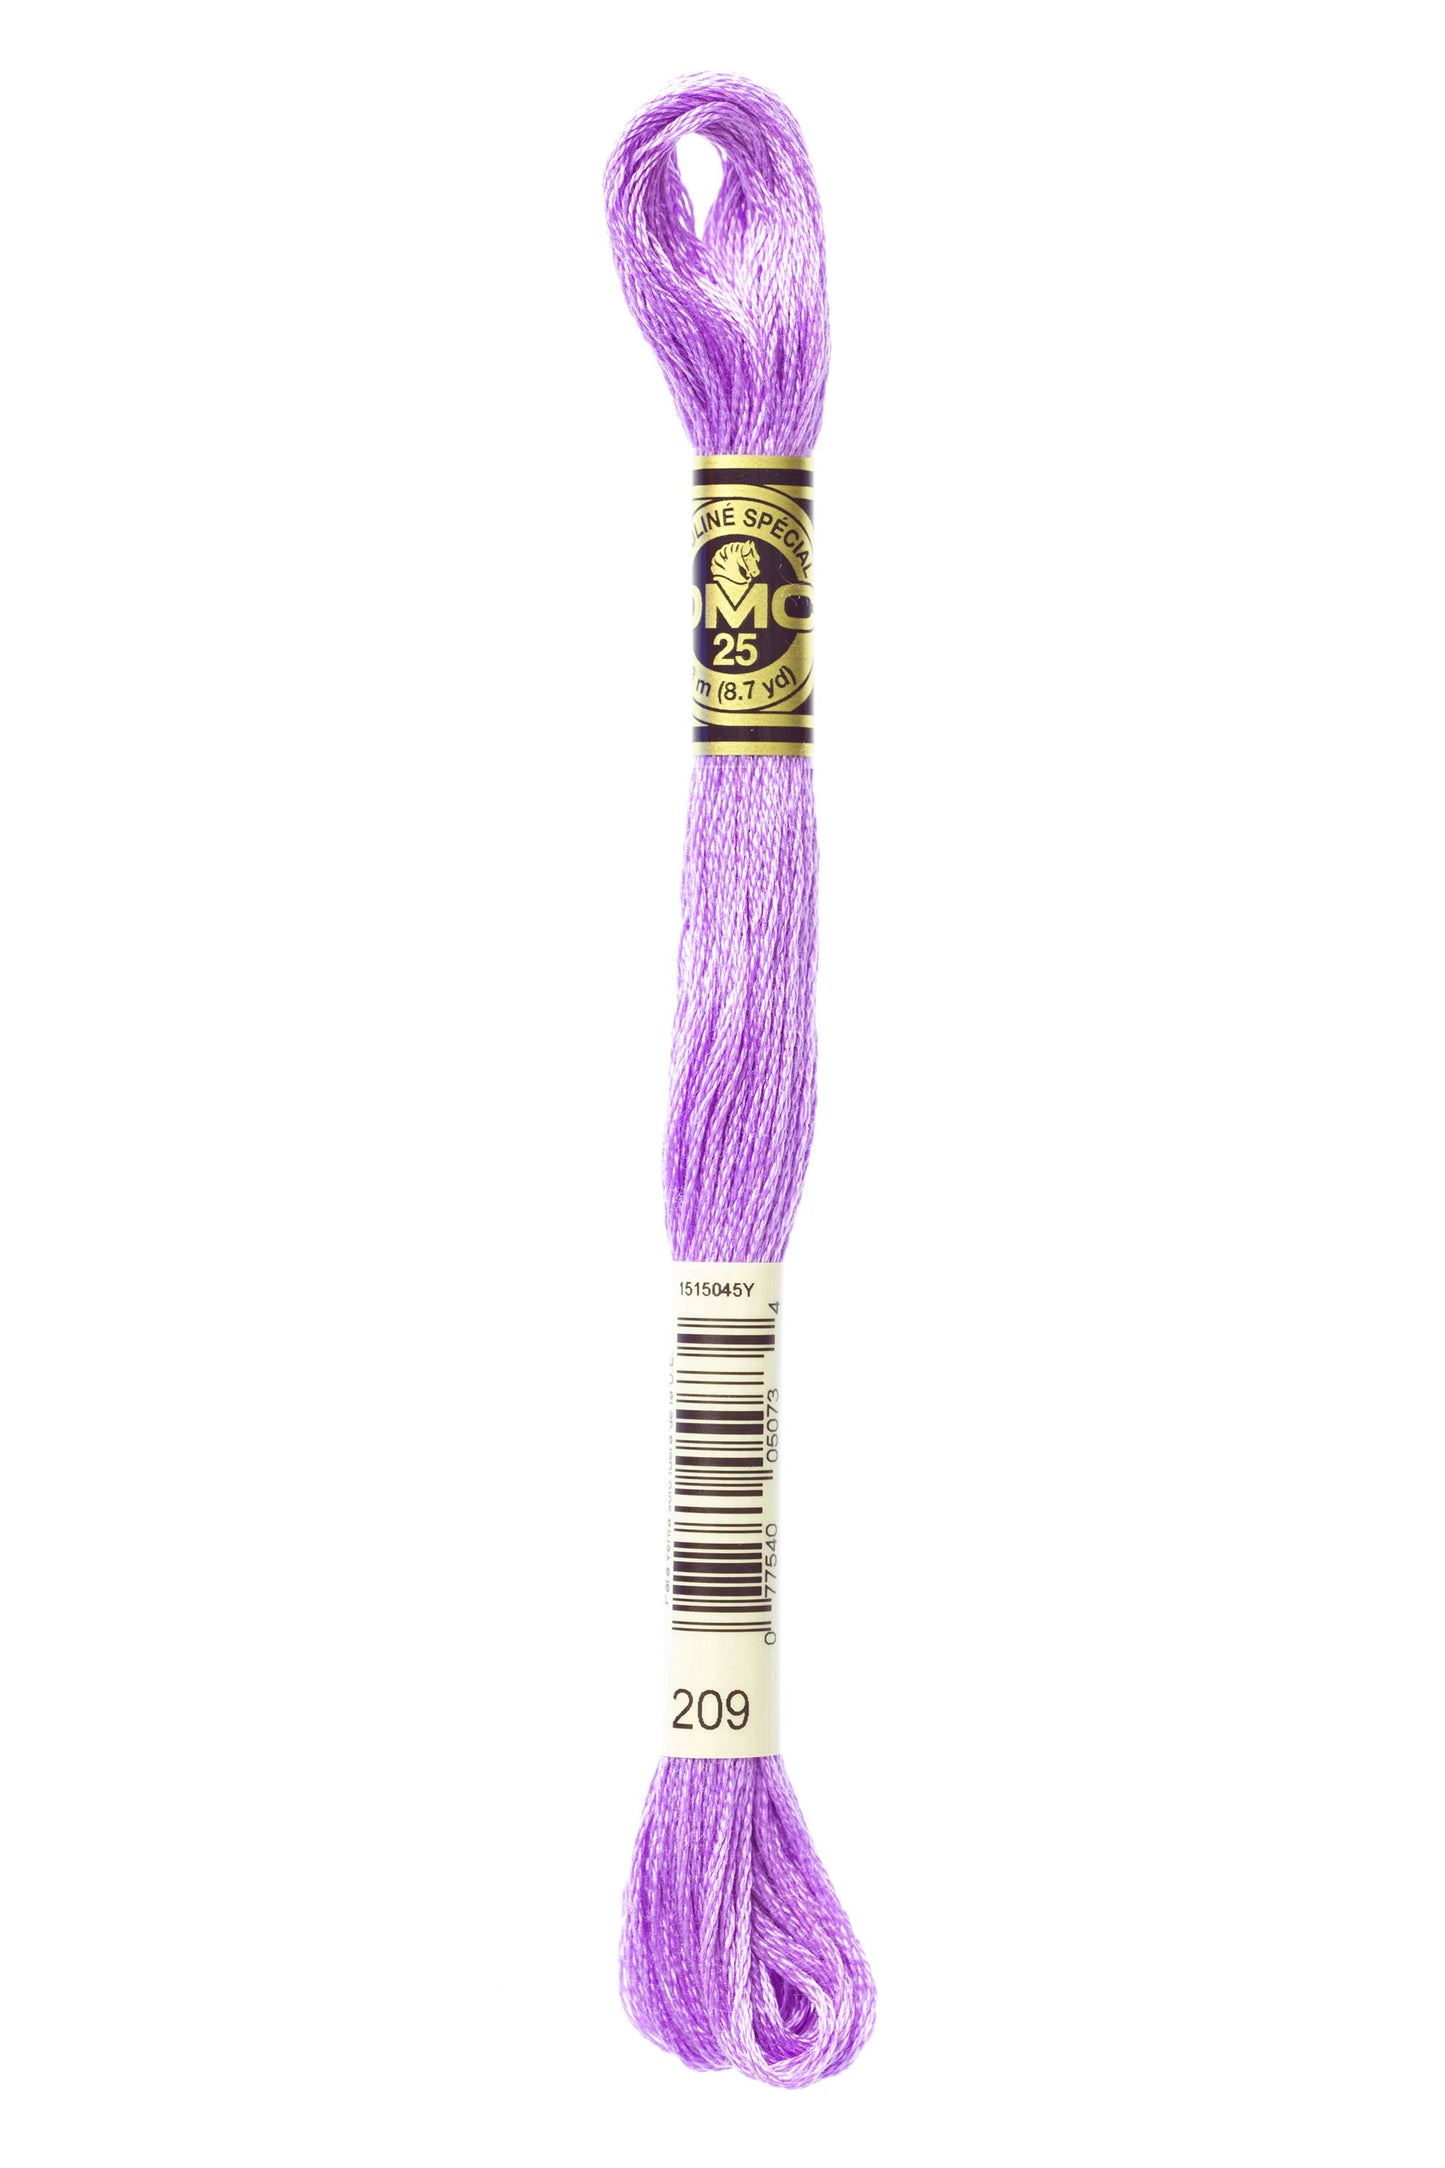 DMC 209 Dark Lavender